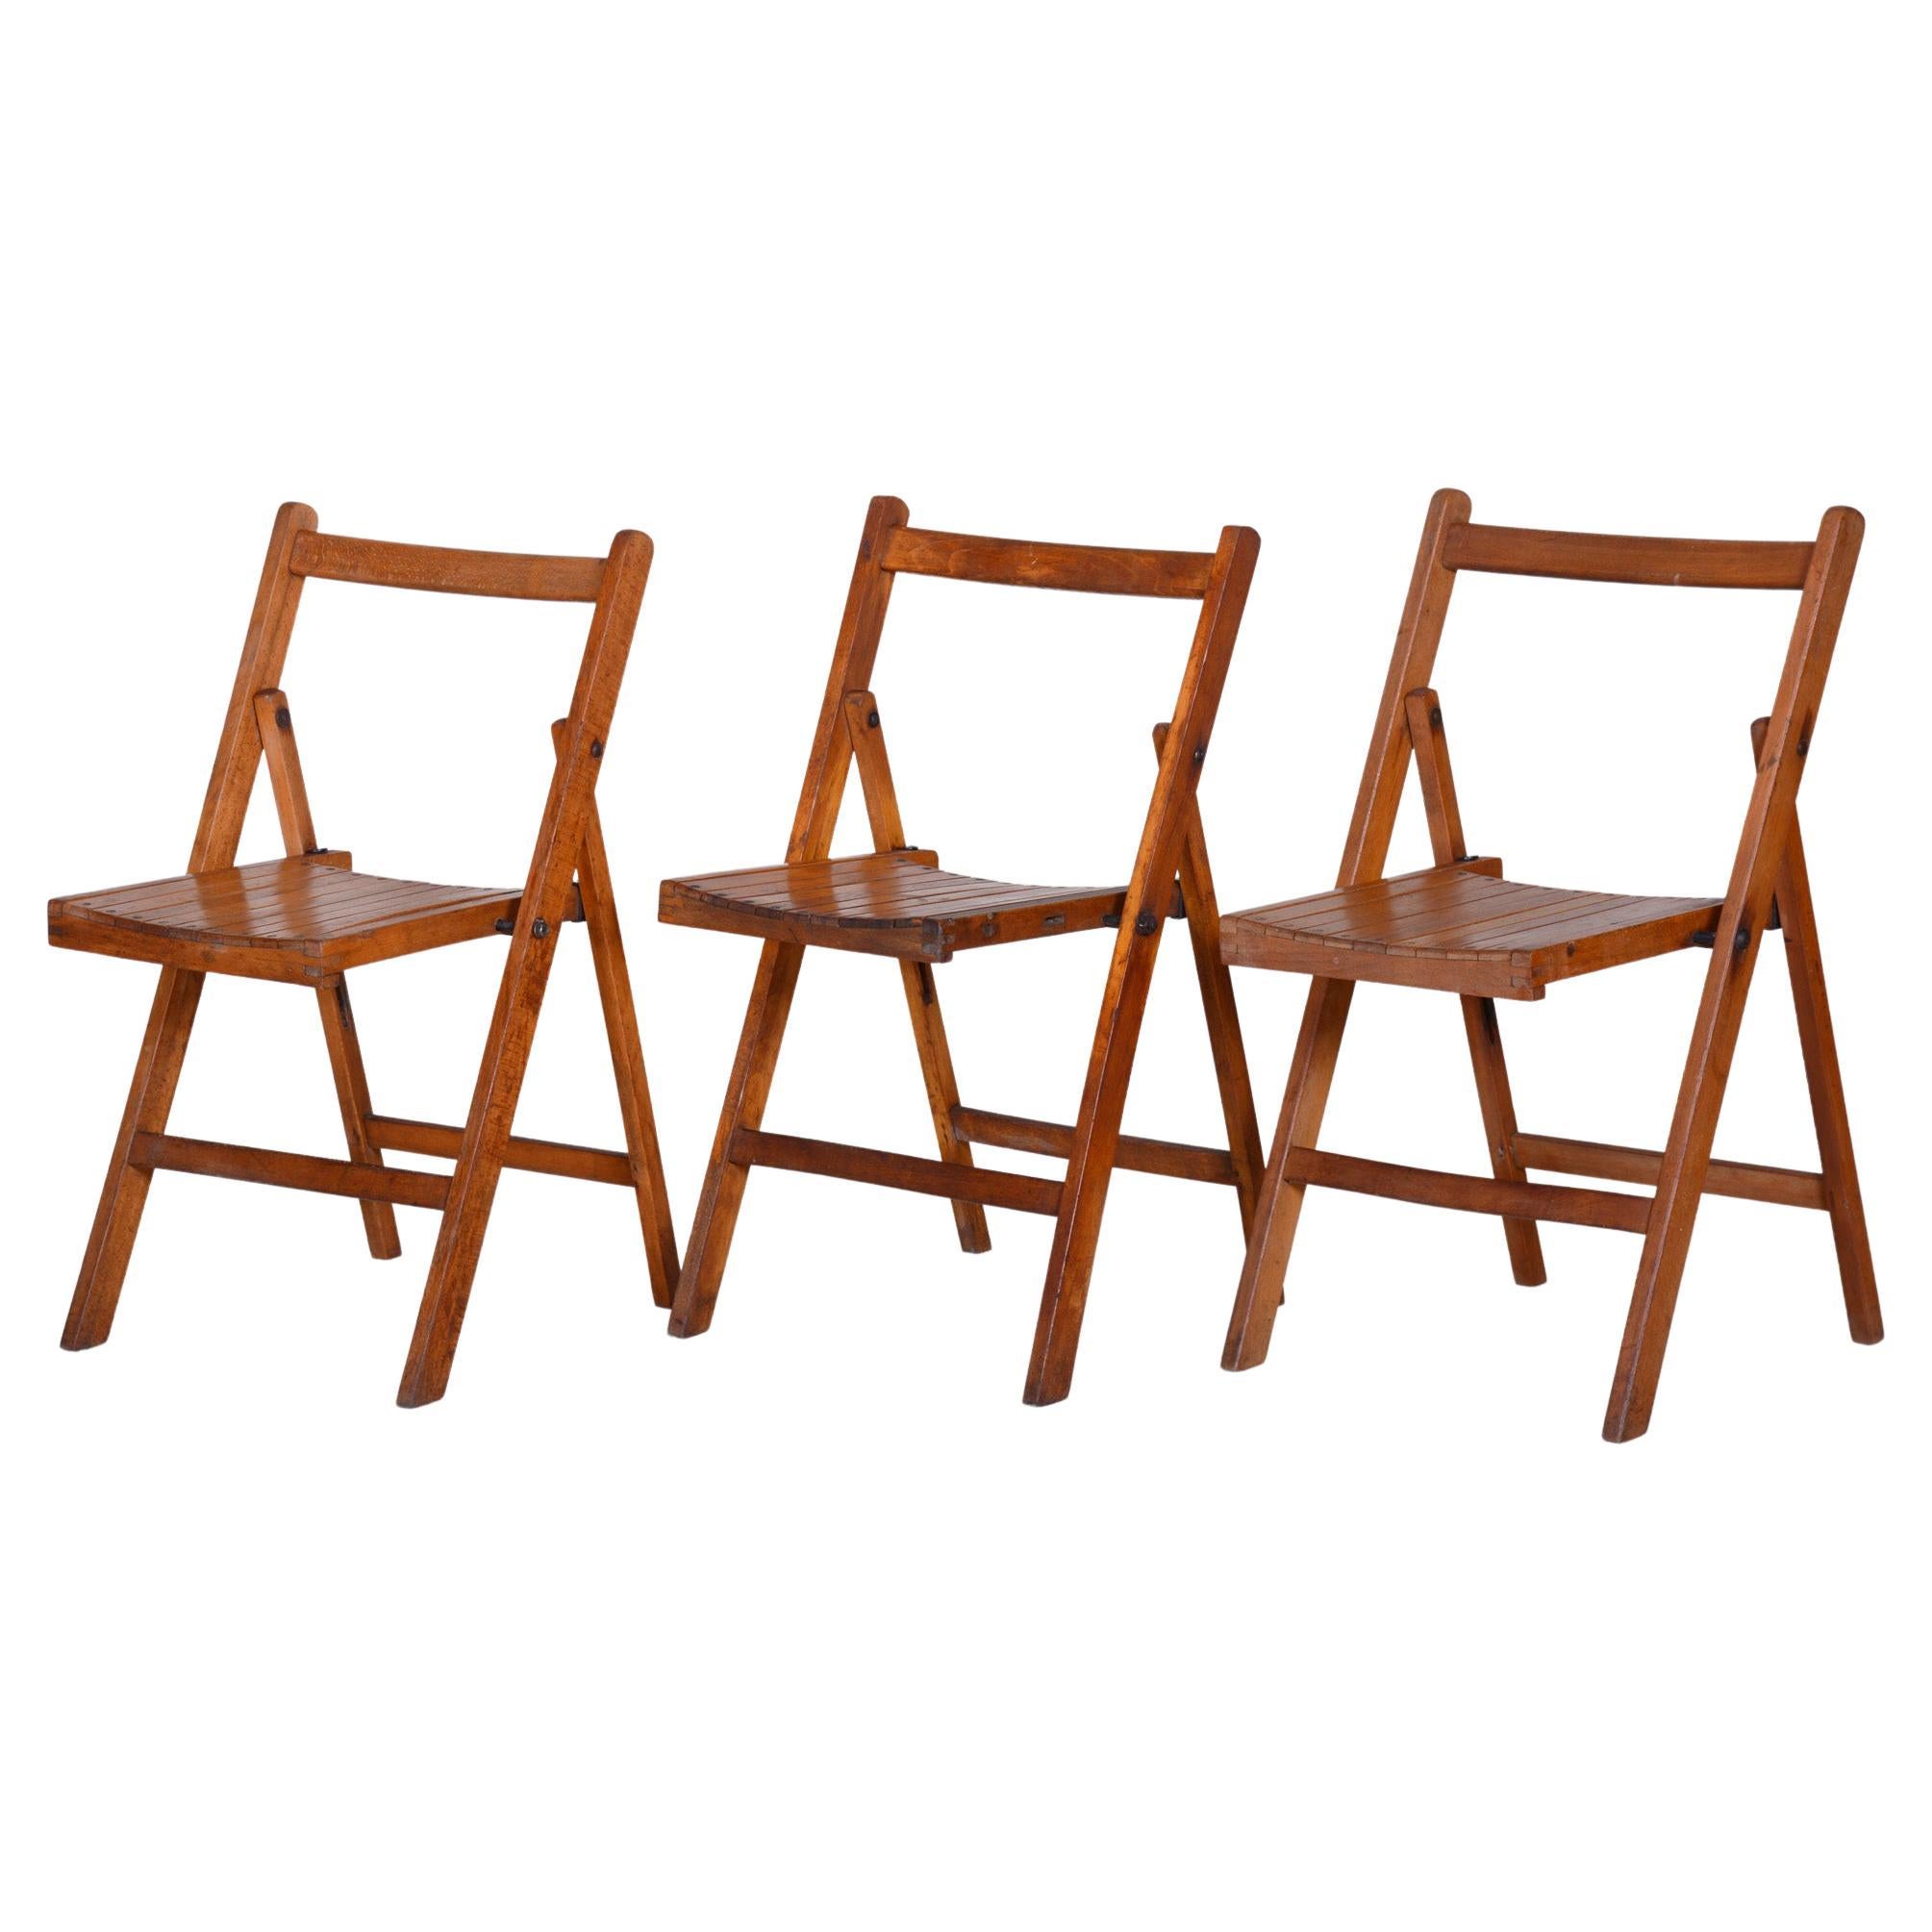 Czech Midcentury Beech Chairs, Original Condition, 1950s, 3 Pieces